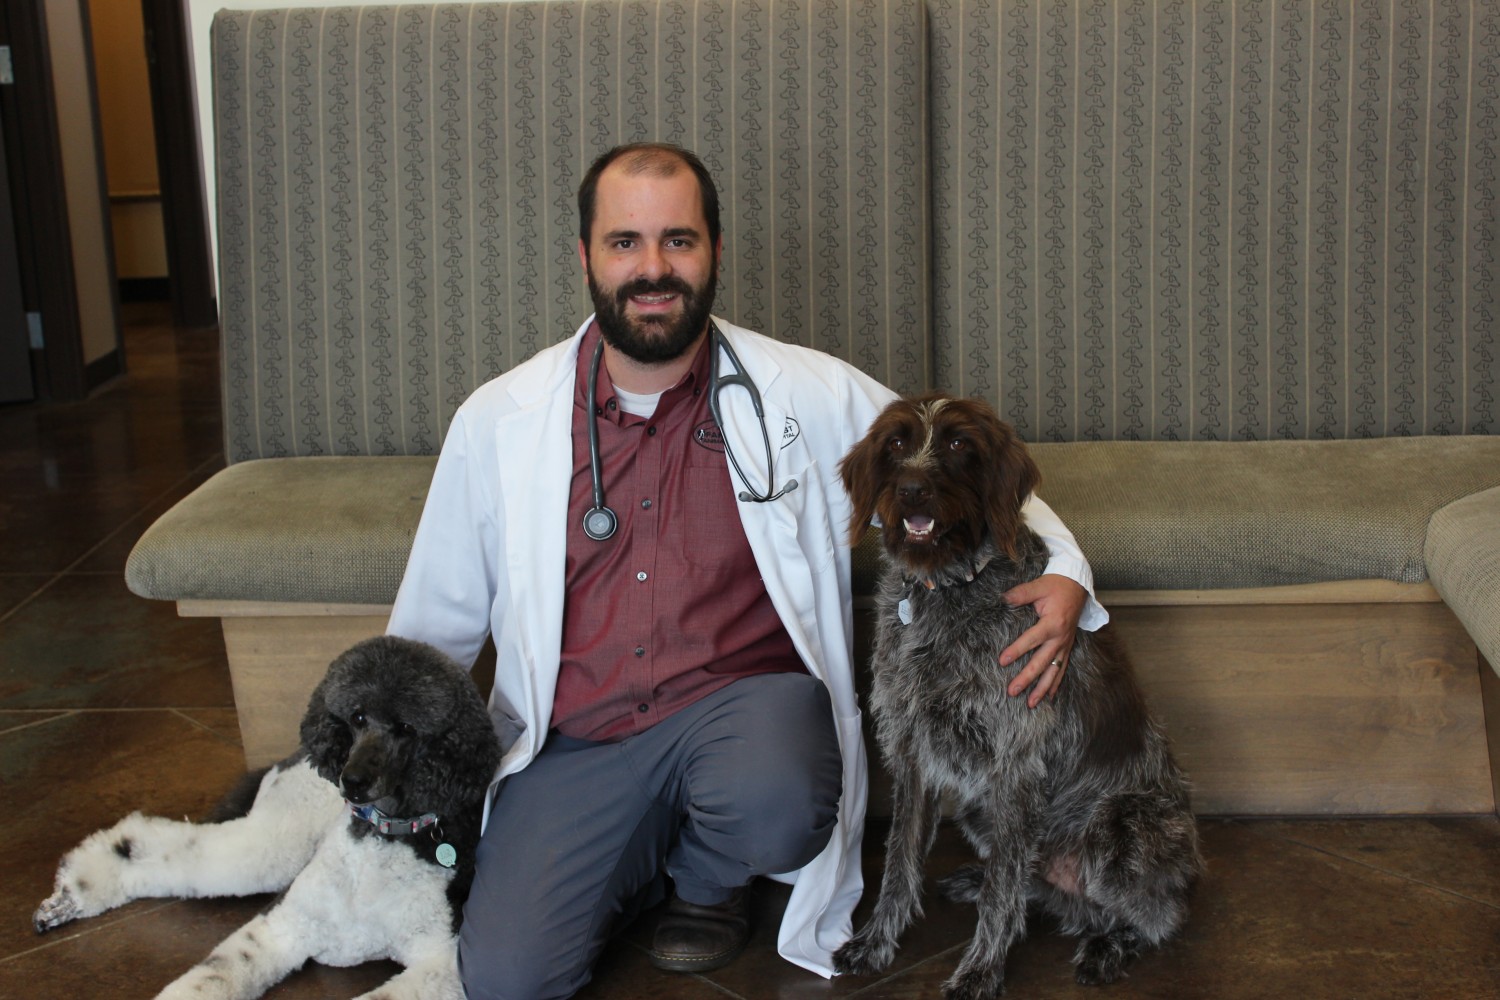 Farr West Animal Hospital, Our Doctors, Dr. Jeffrey S. Bailey